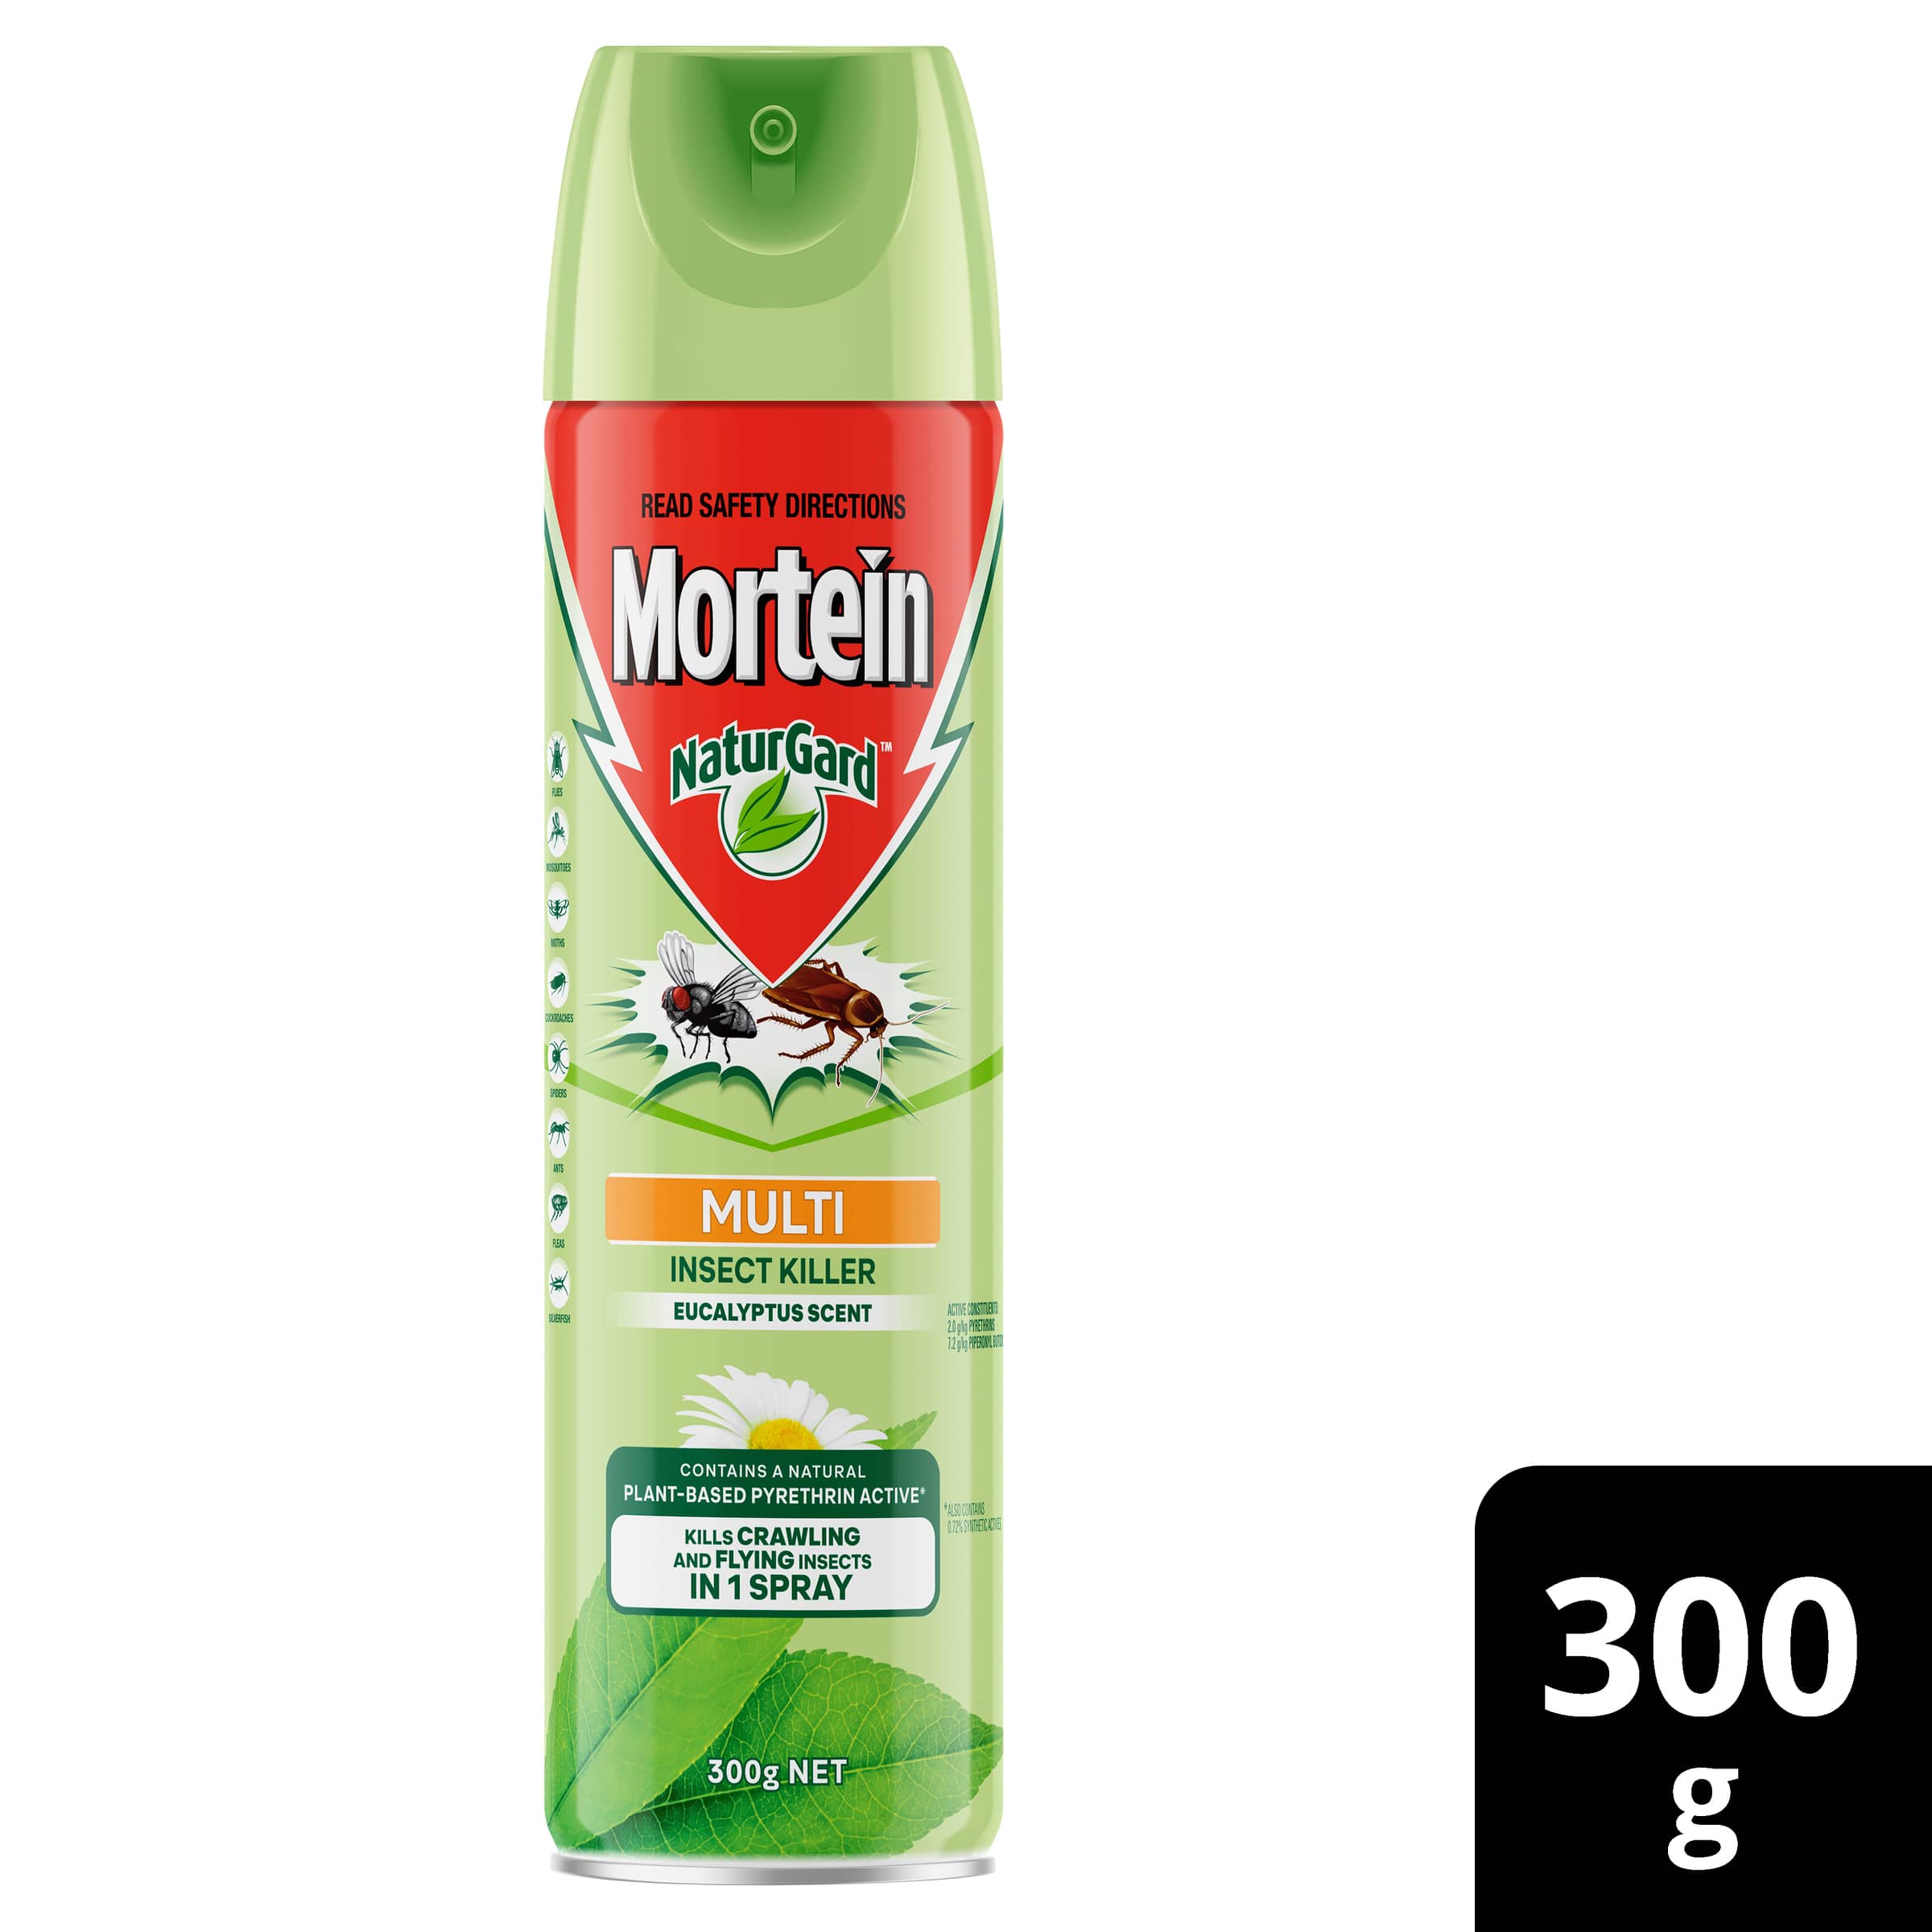 Mortein Naturgard Multi Insect Killer 300g